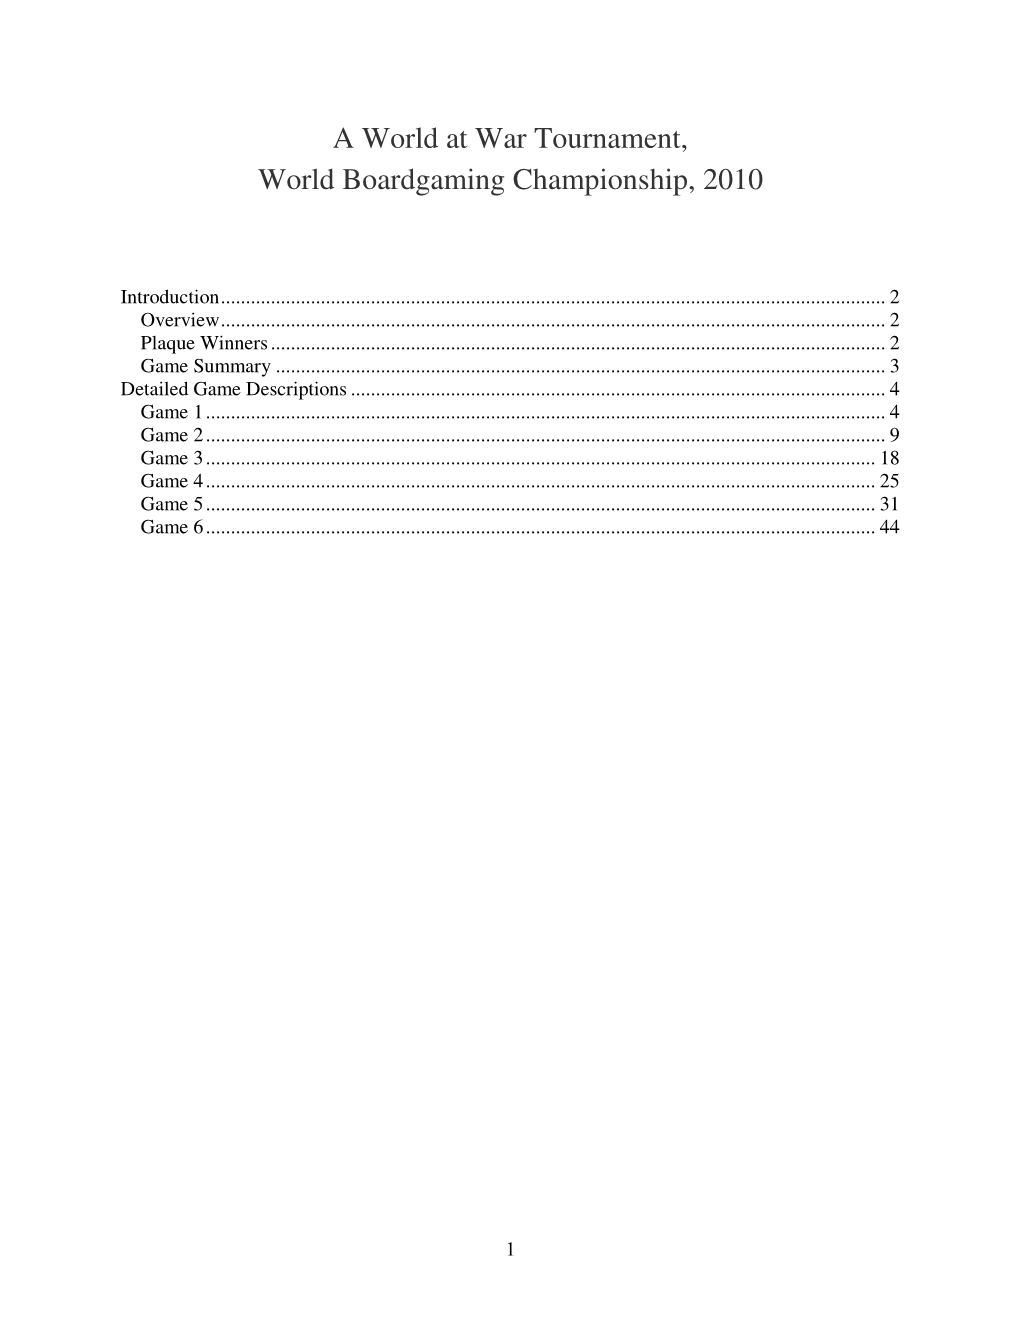 A World at War Tournament, World Boardgaming Championship, 2010